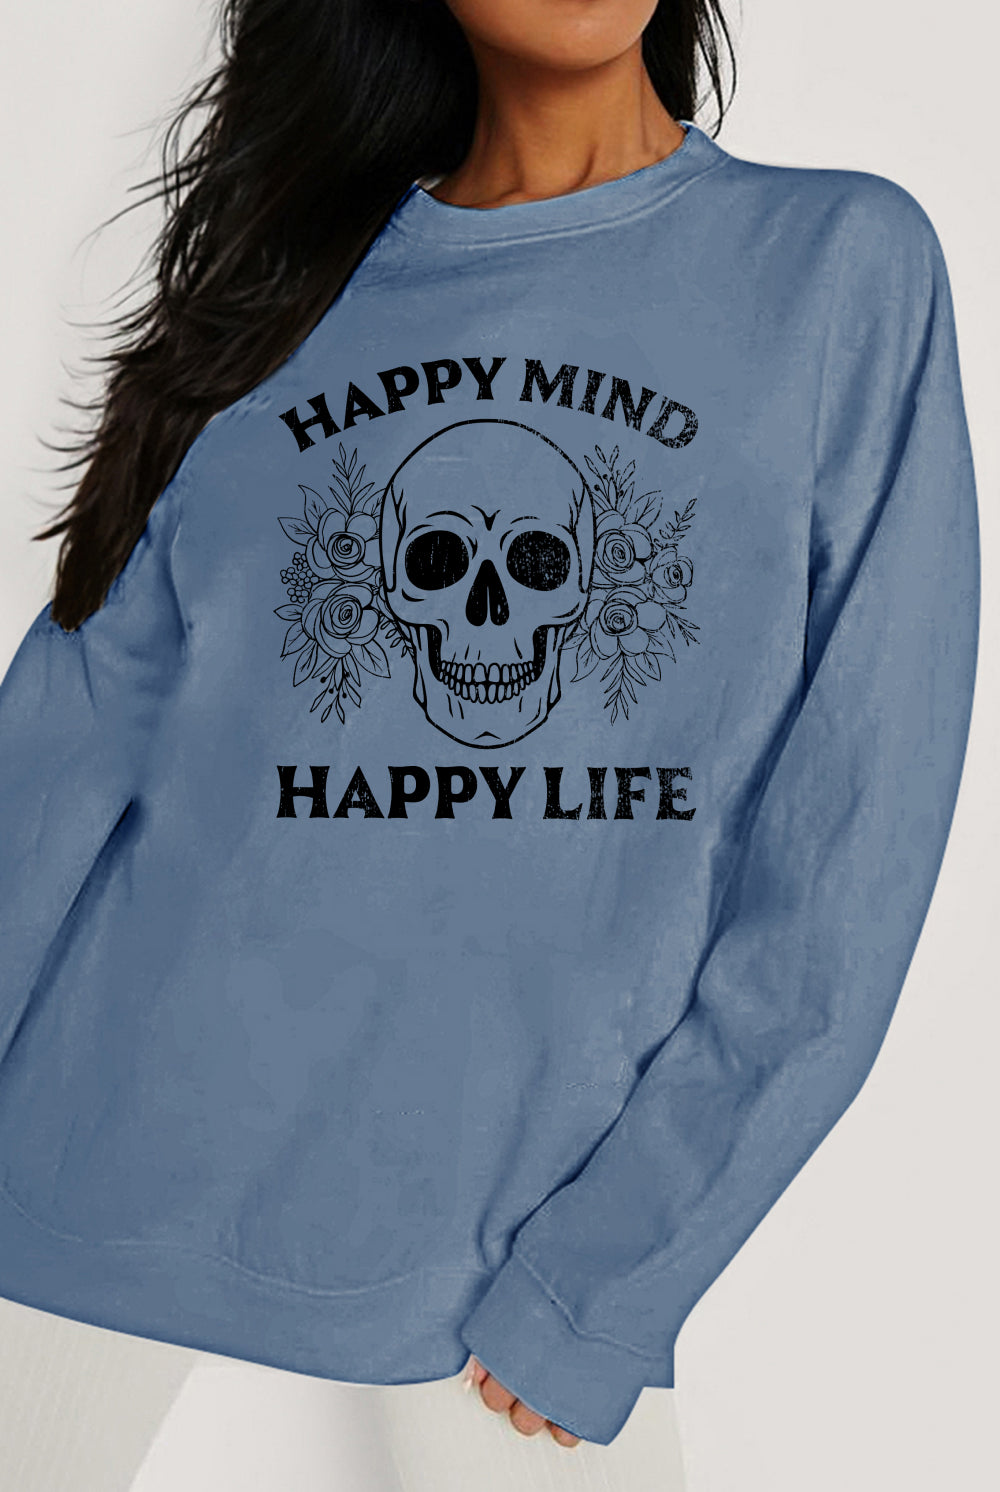 Slate Gray Simply Love Simply Love Full Size HAPPY MIND HAPPY LIFE SKULL Graphic Sweatshirt Sweatshirts